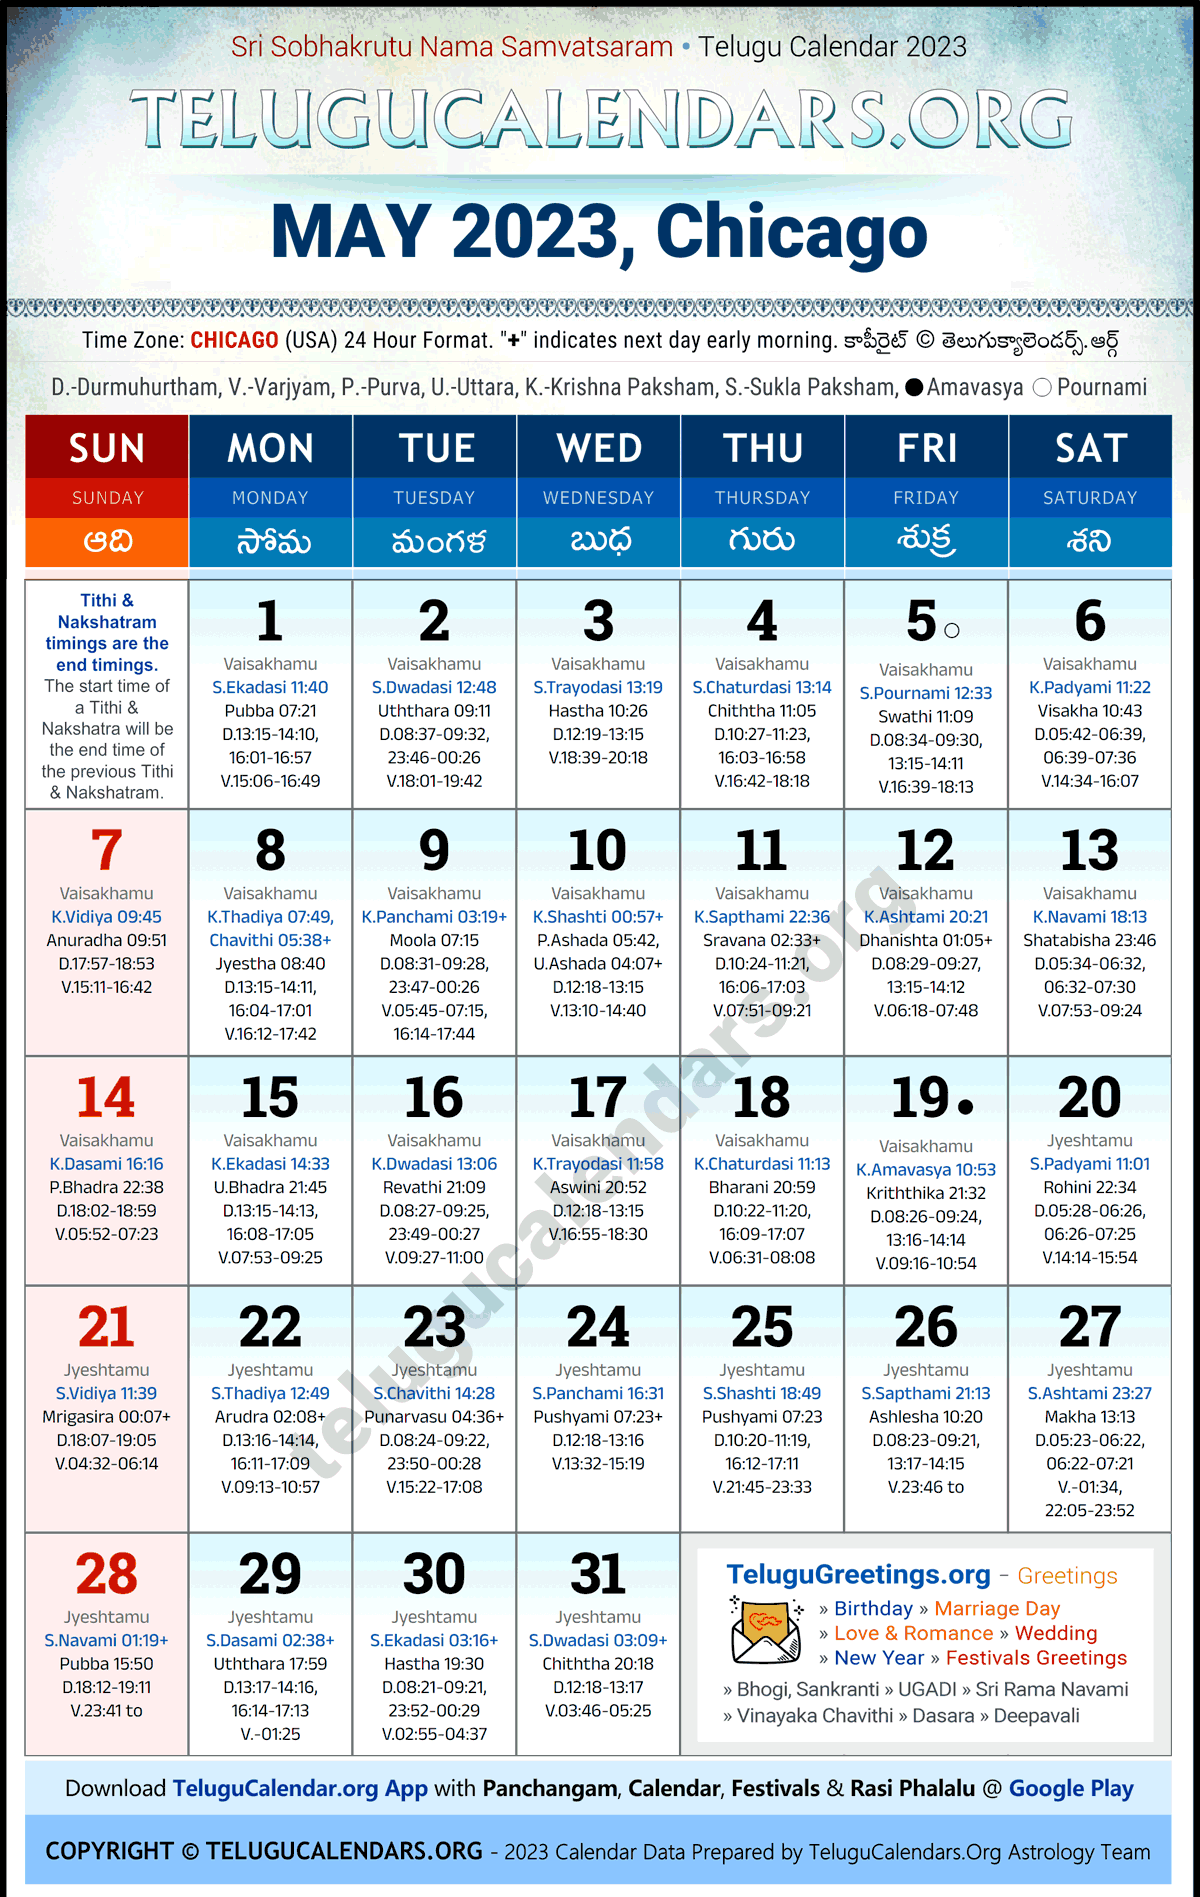 Telugu Calendar 2023 May Festivals for Chicago